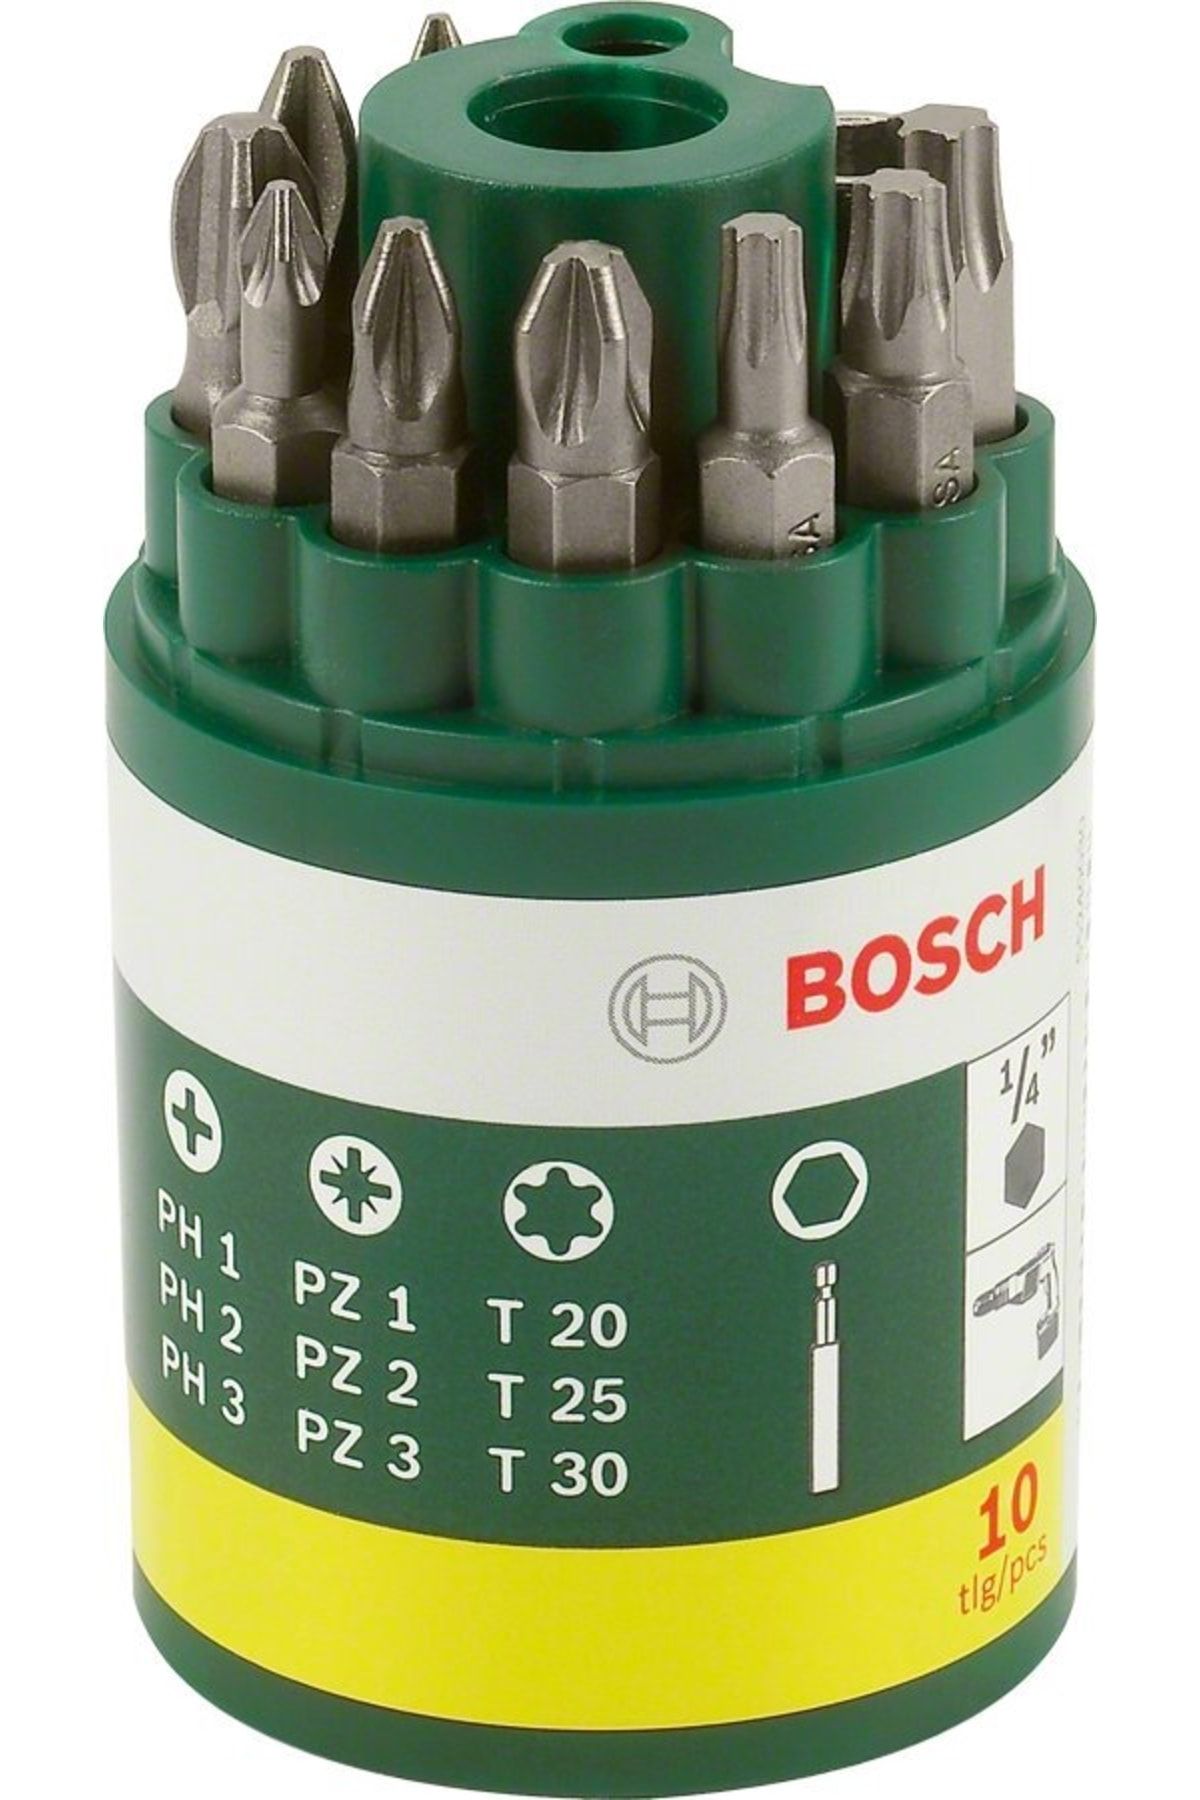 Bosch Diy 10 Parçalı Vidalama Ucu Seti